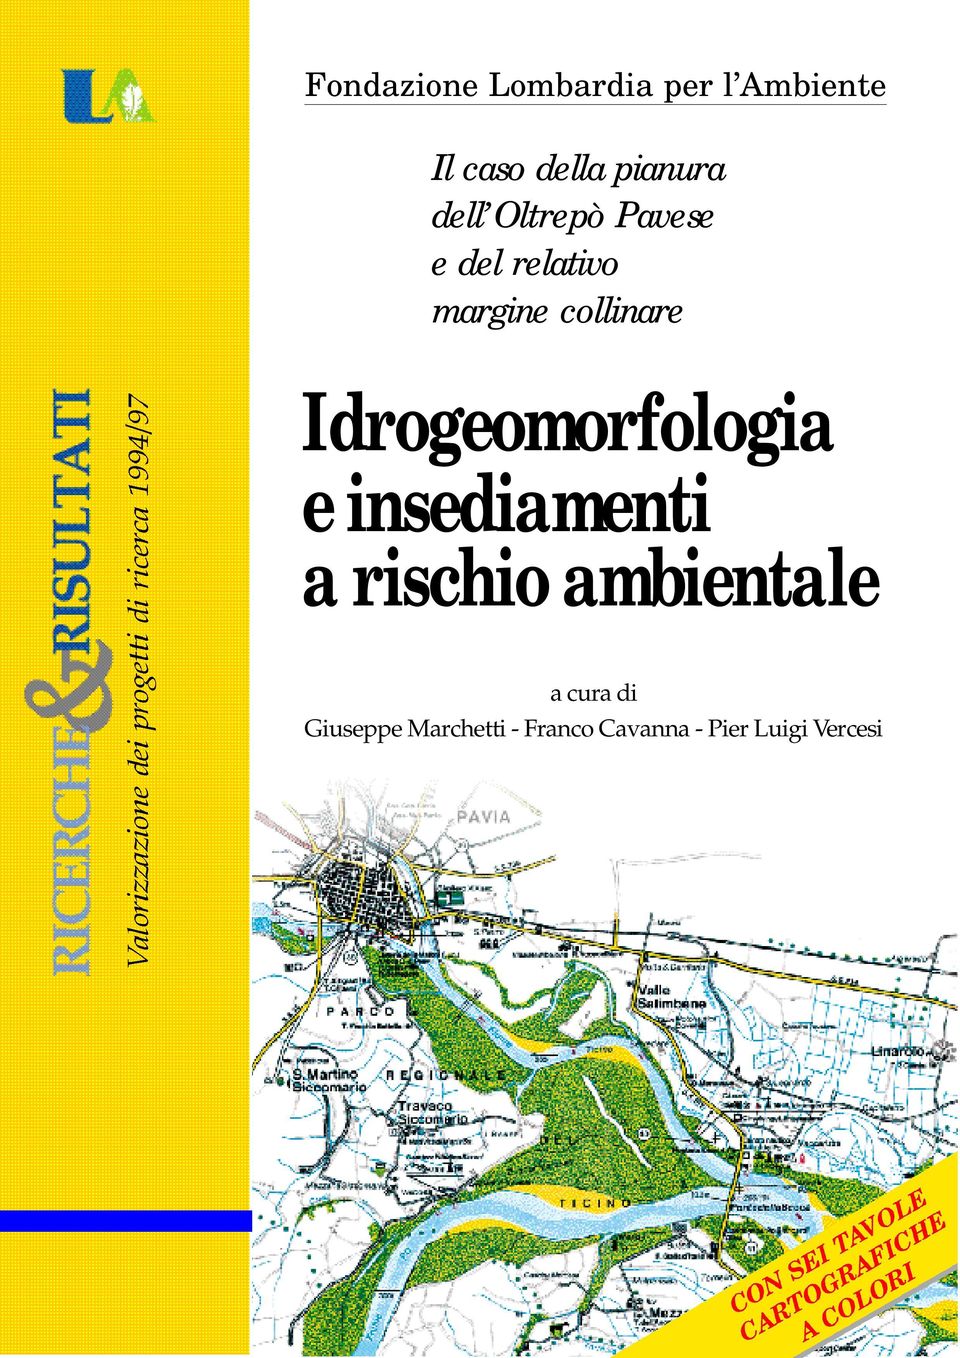 Idrogeomorfologia e insediamenti a rischio ambientale a